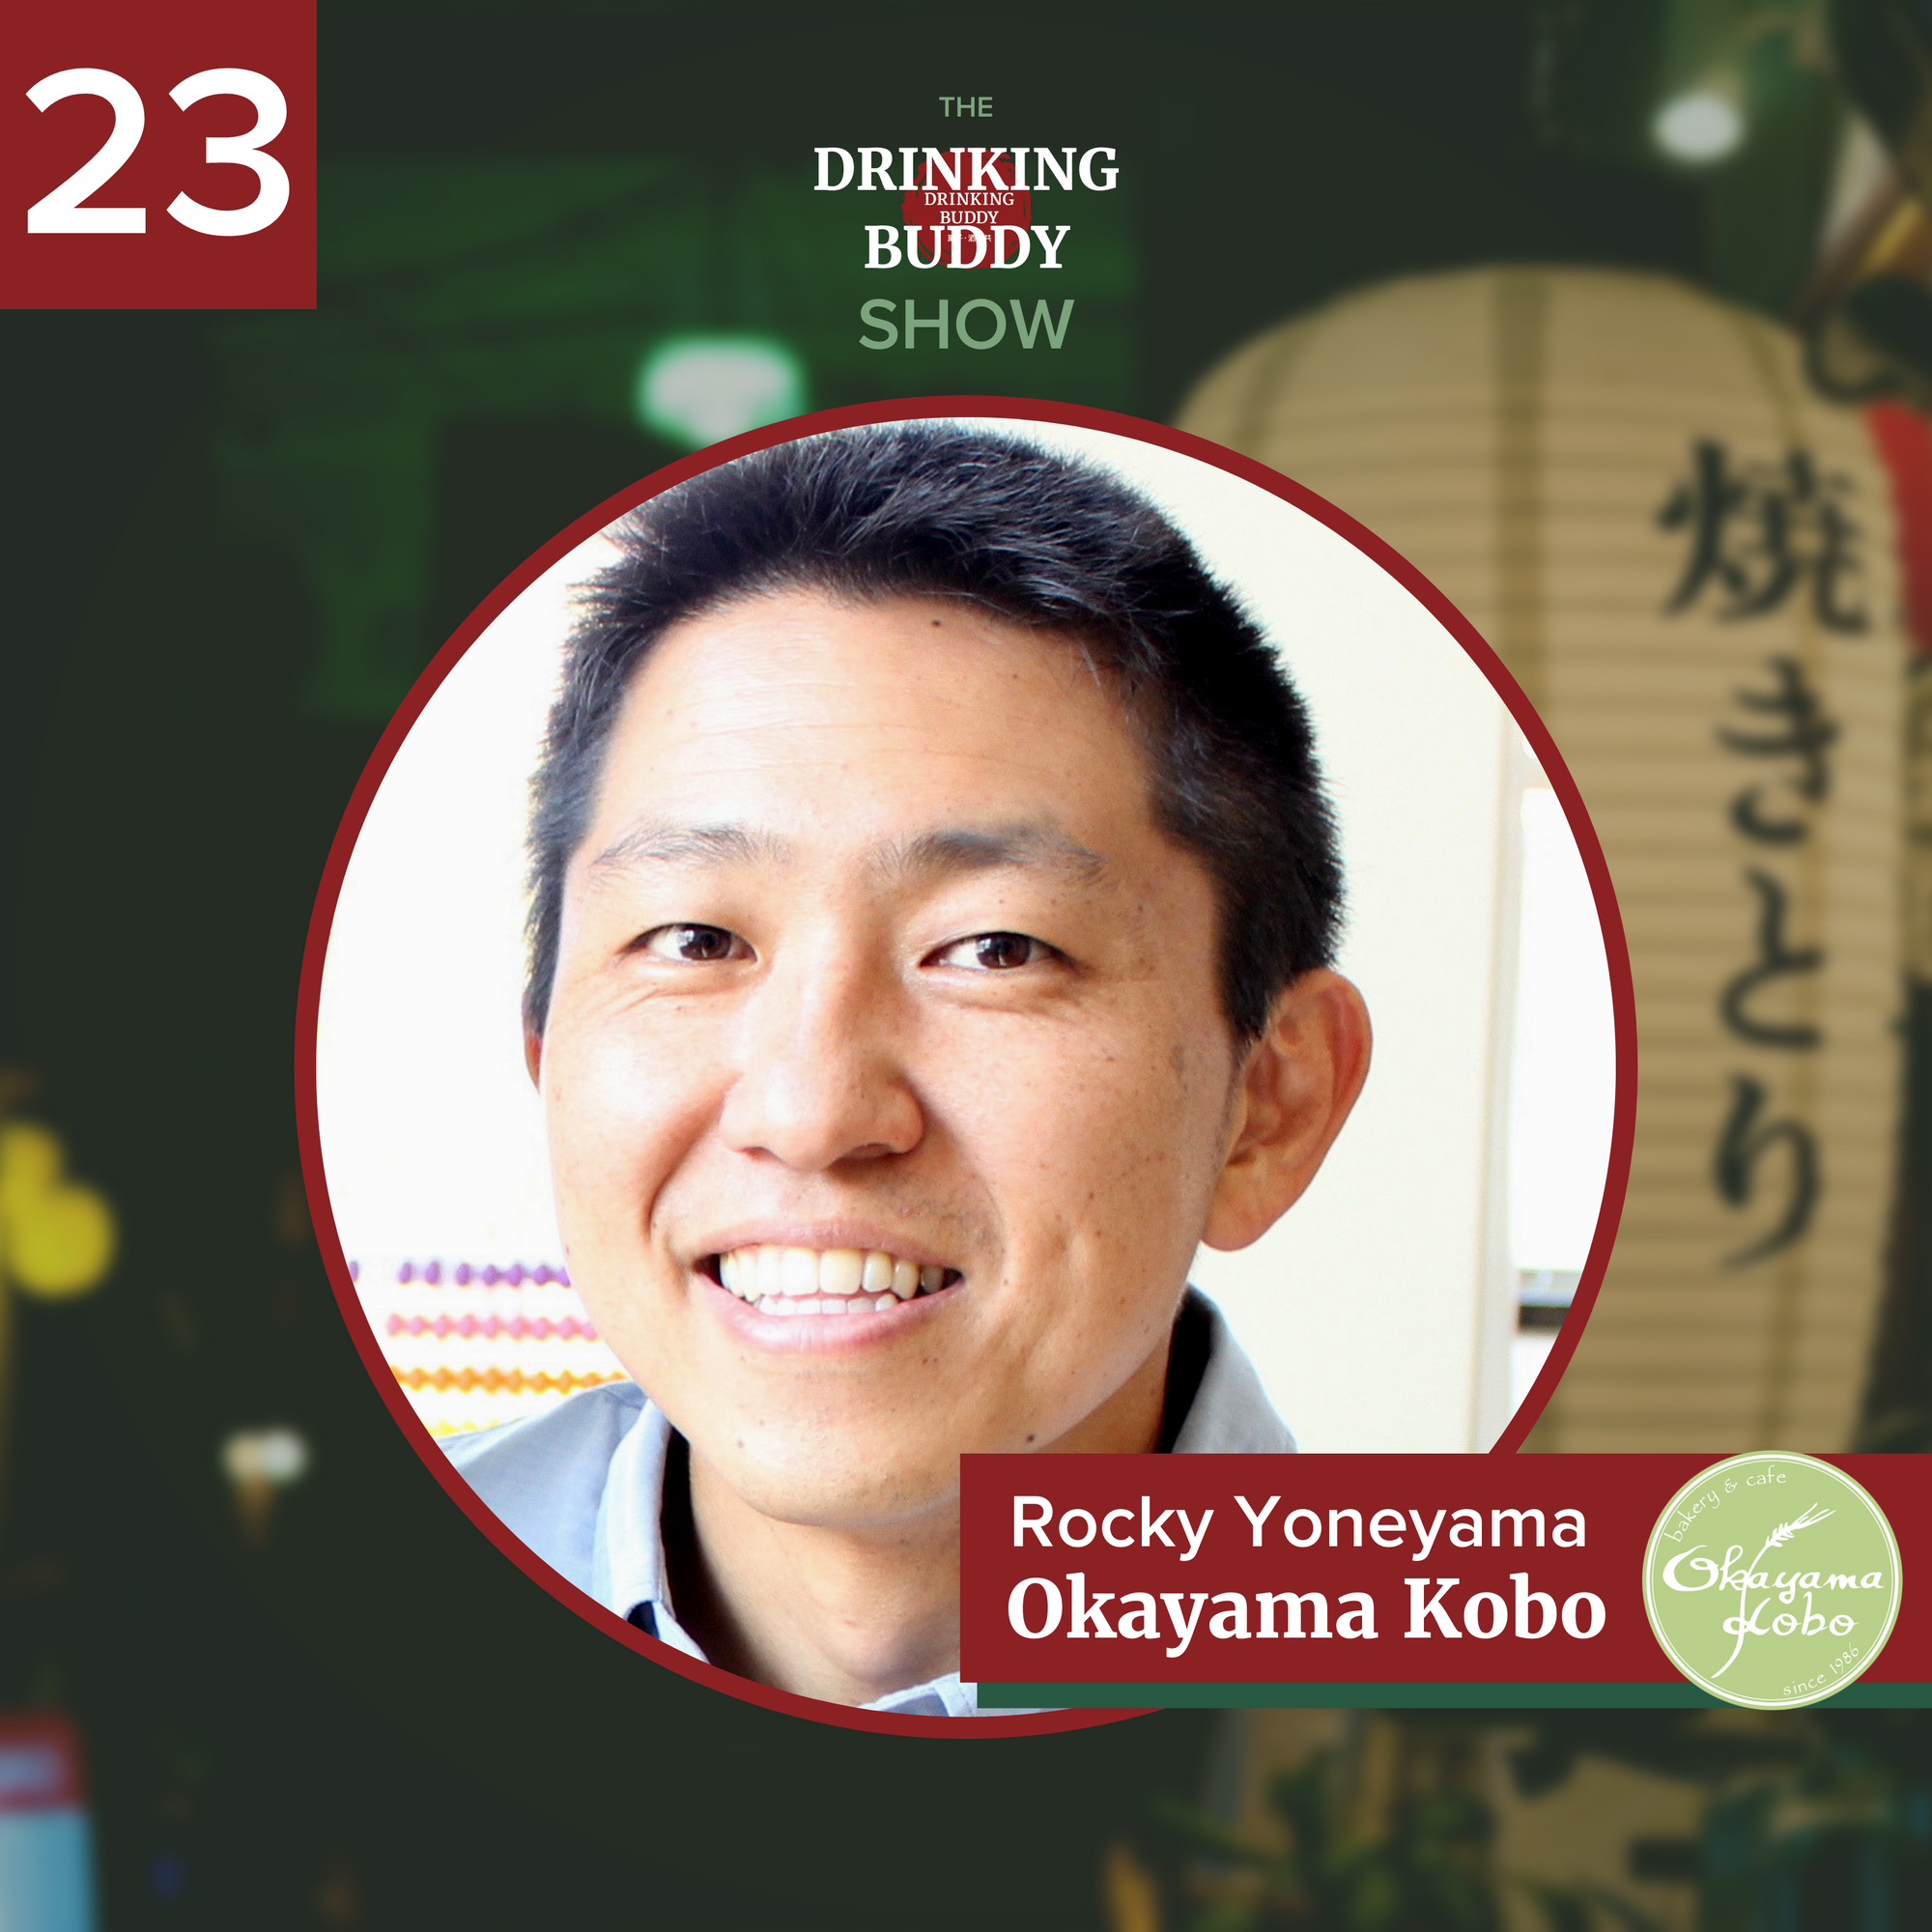 The Drinking Buddy Show Episode 23: Rocky Yoneyama of Okayama Kobo